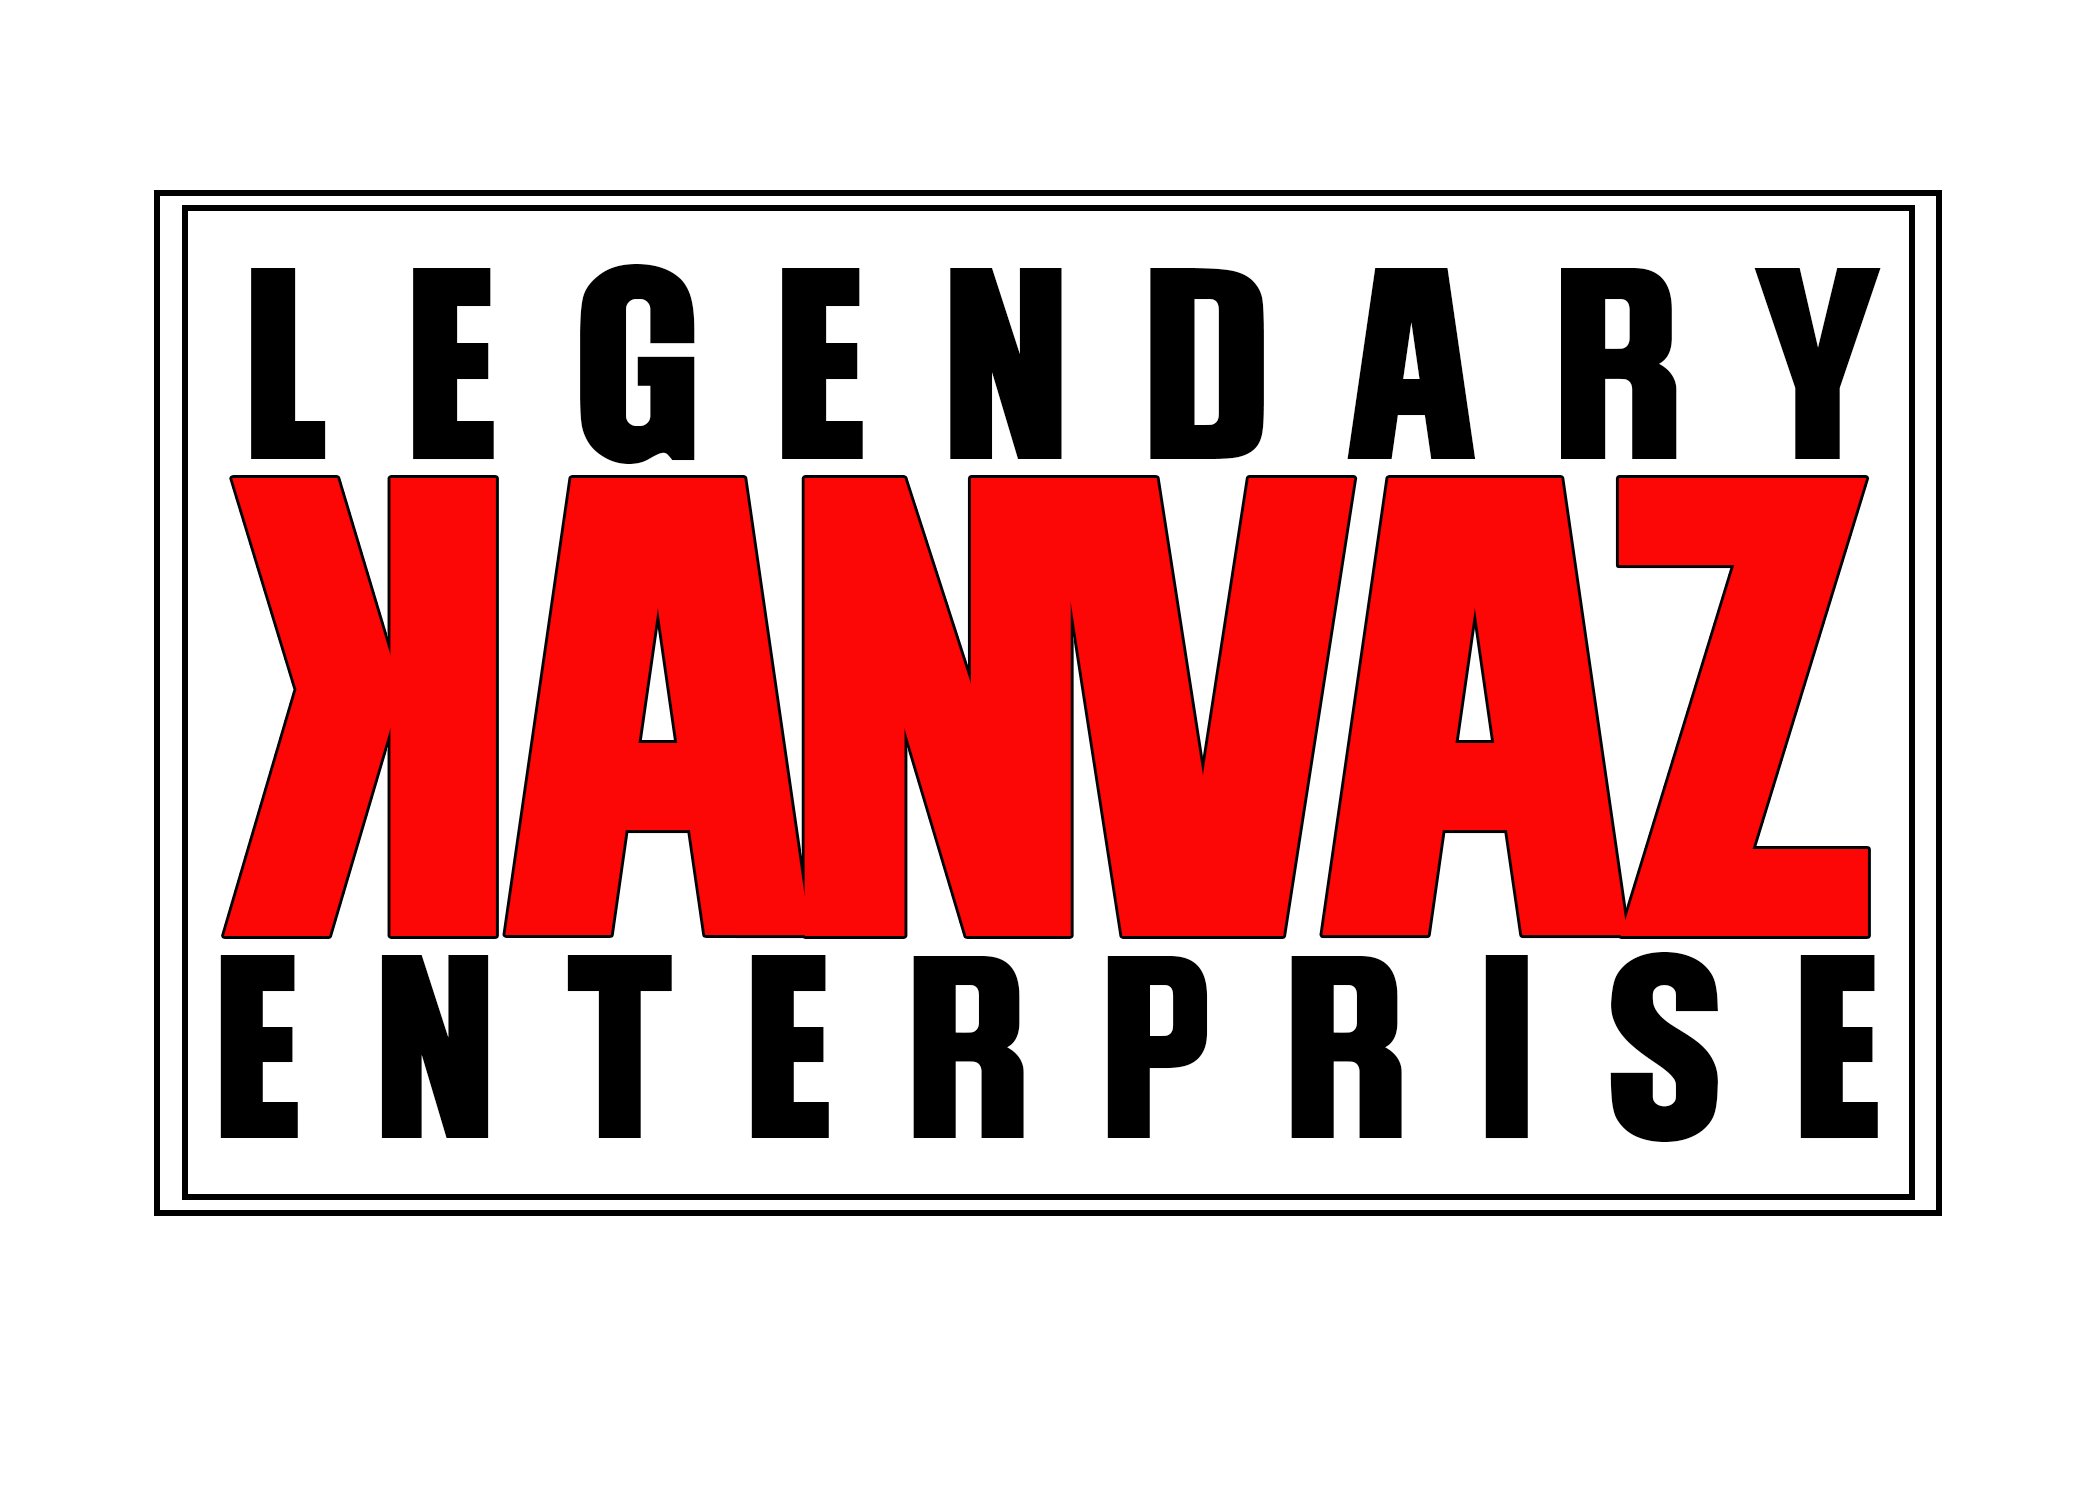 Legendary Kanvaz Enterprises